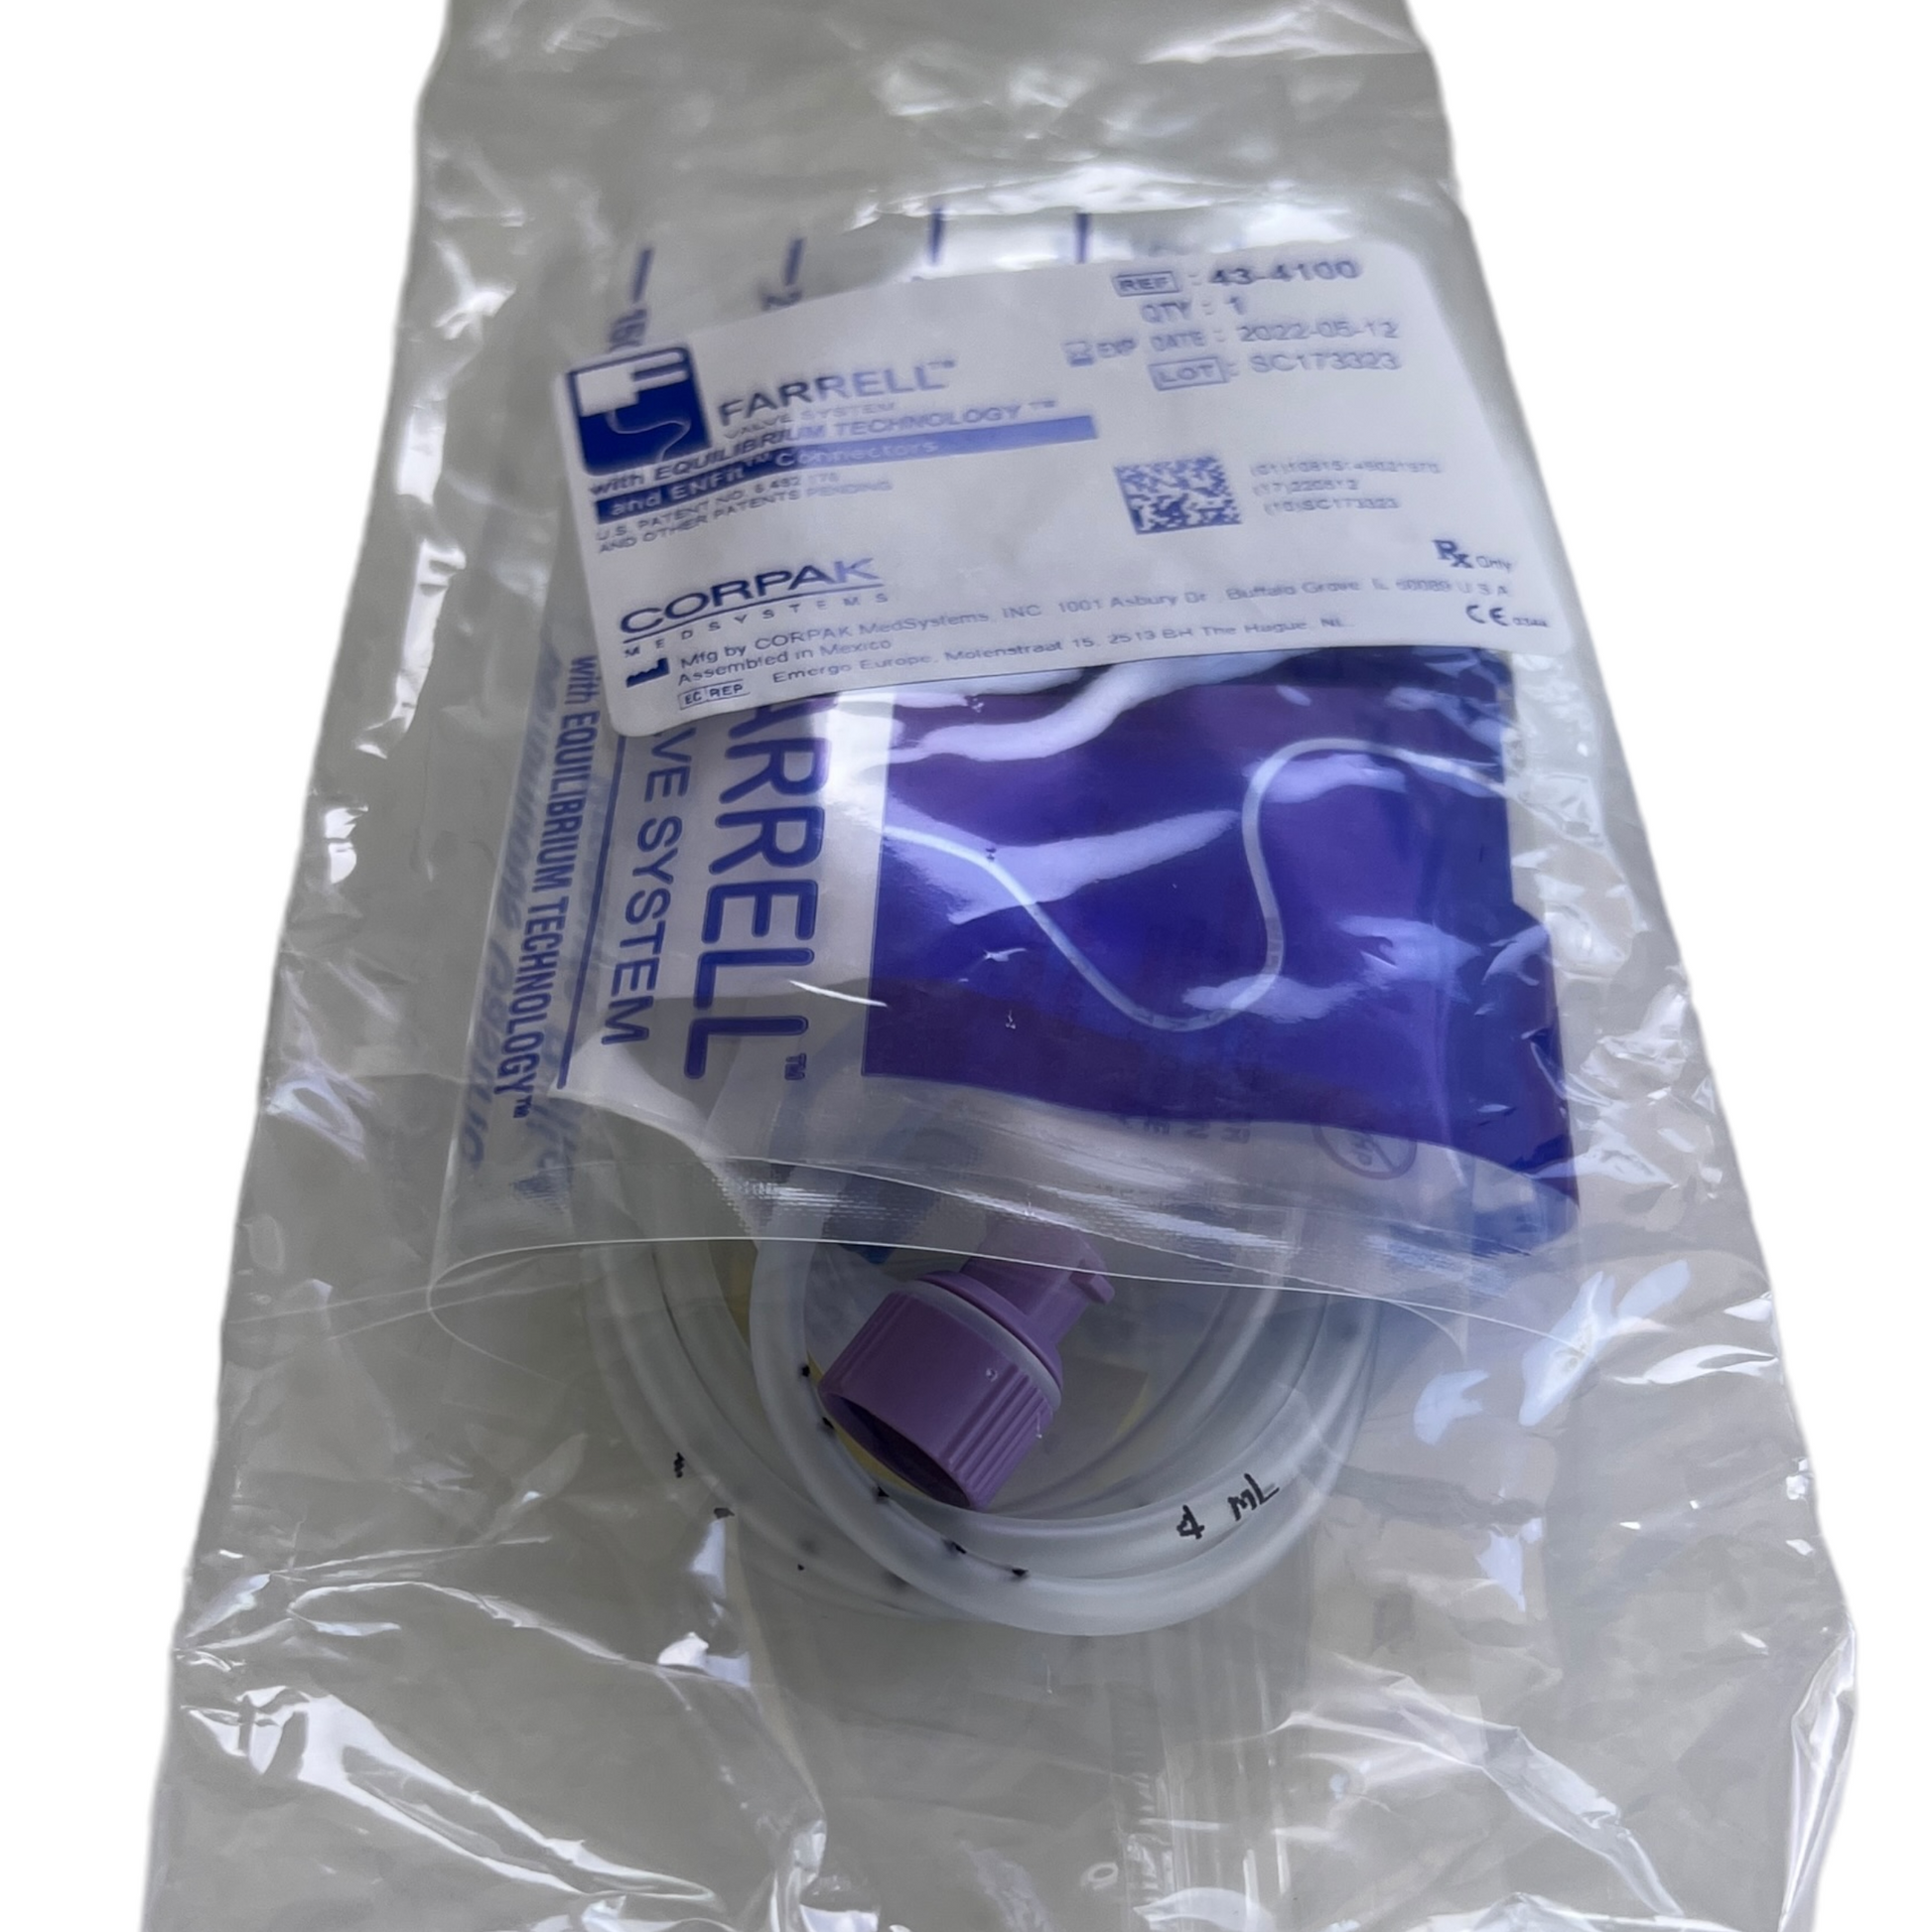 ⚖️ FARRELL* Bag — Gastric Pressure Relief Valve System (ENFit Compatible) Medical Supplies Kylee & Co   